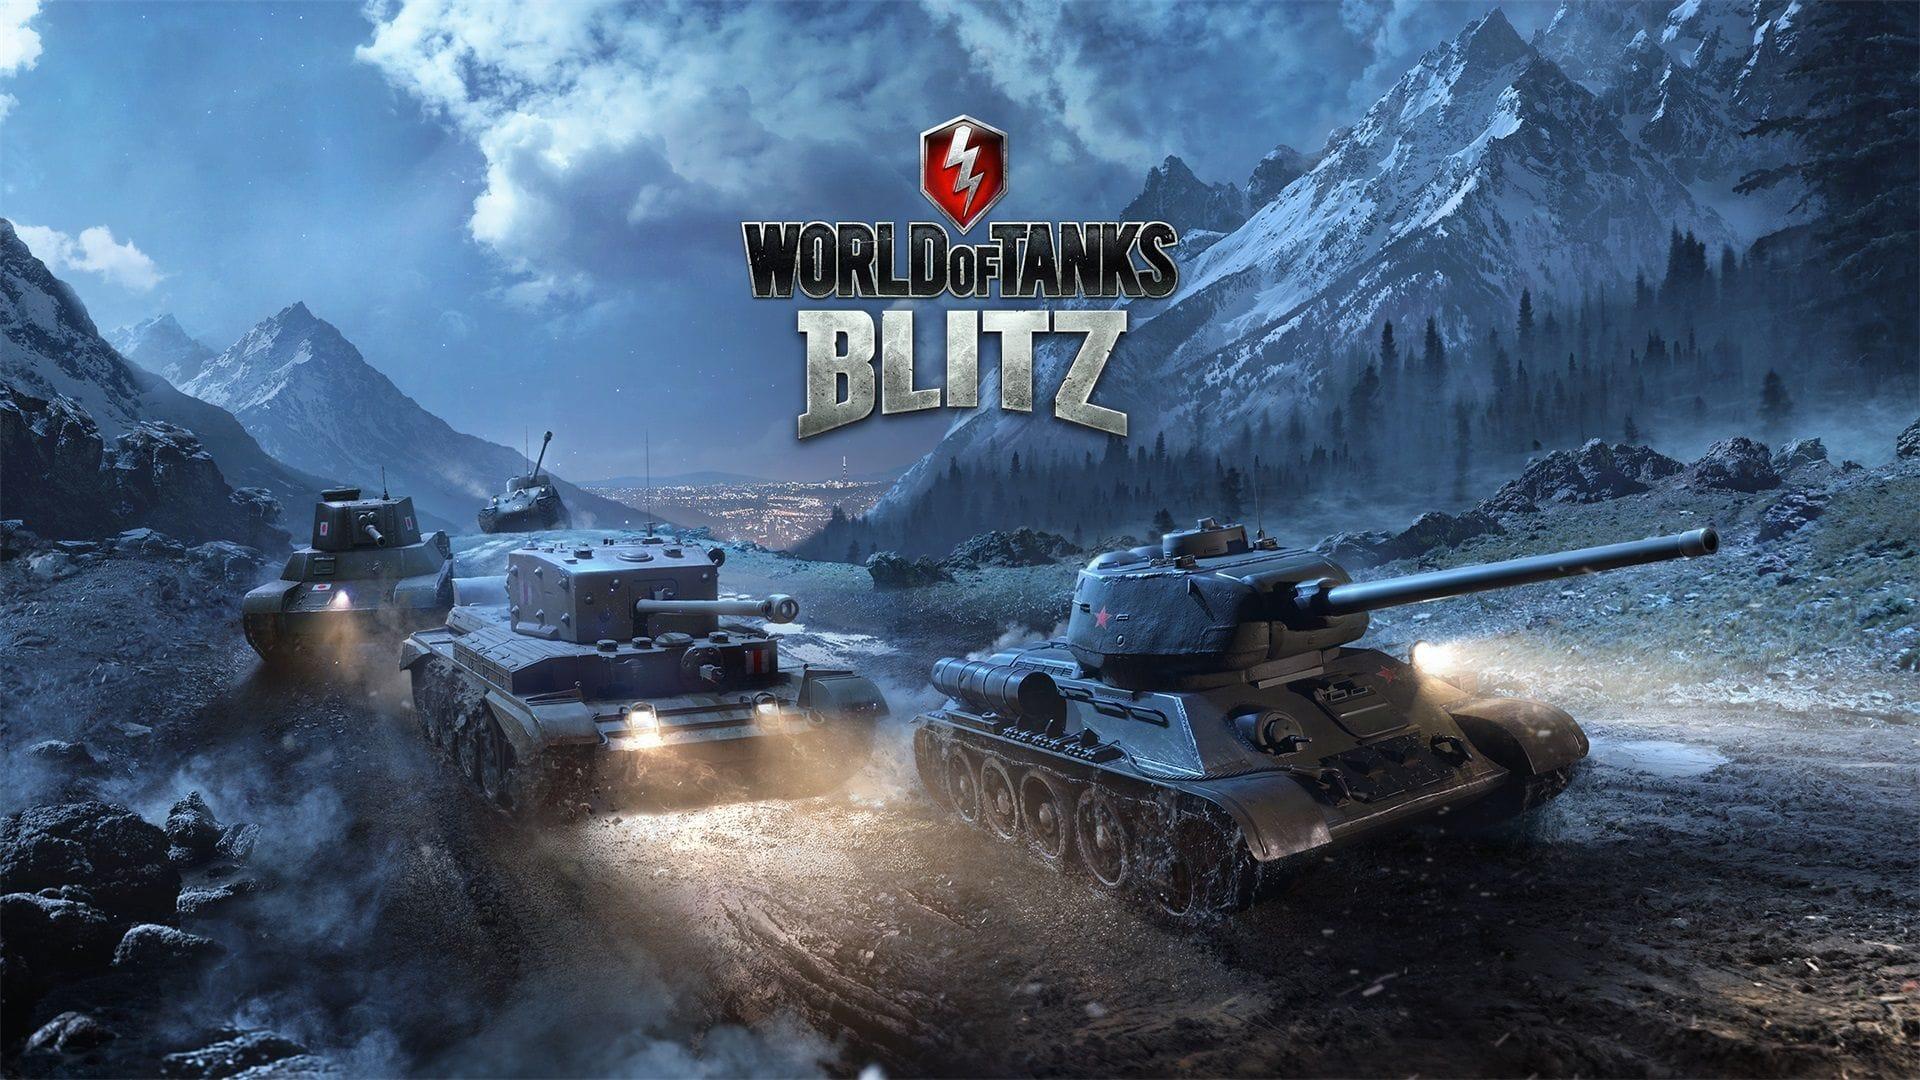 World of Tanks Blitz Wallpapers - Top Free World of Tanks Blitz